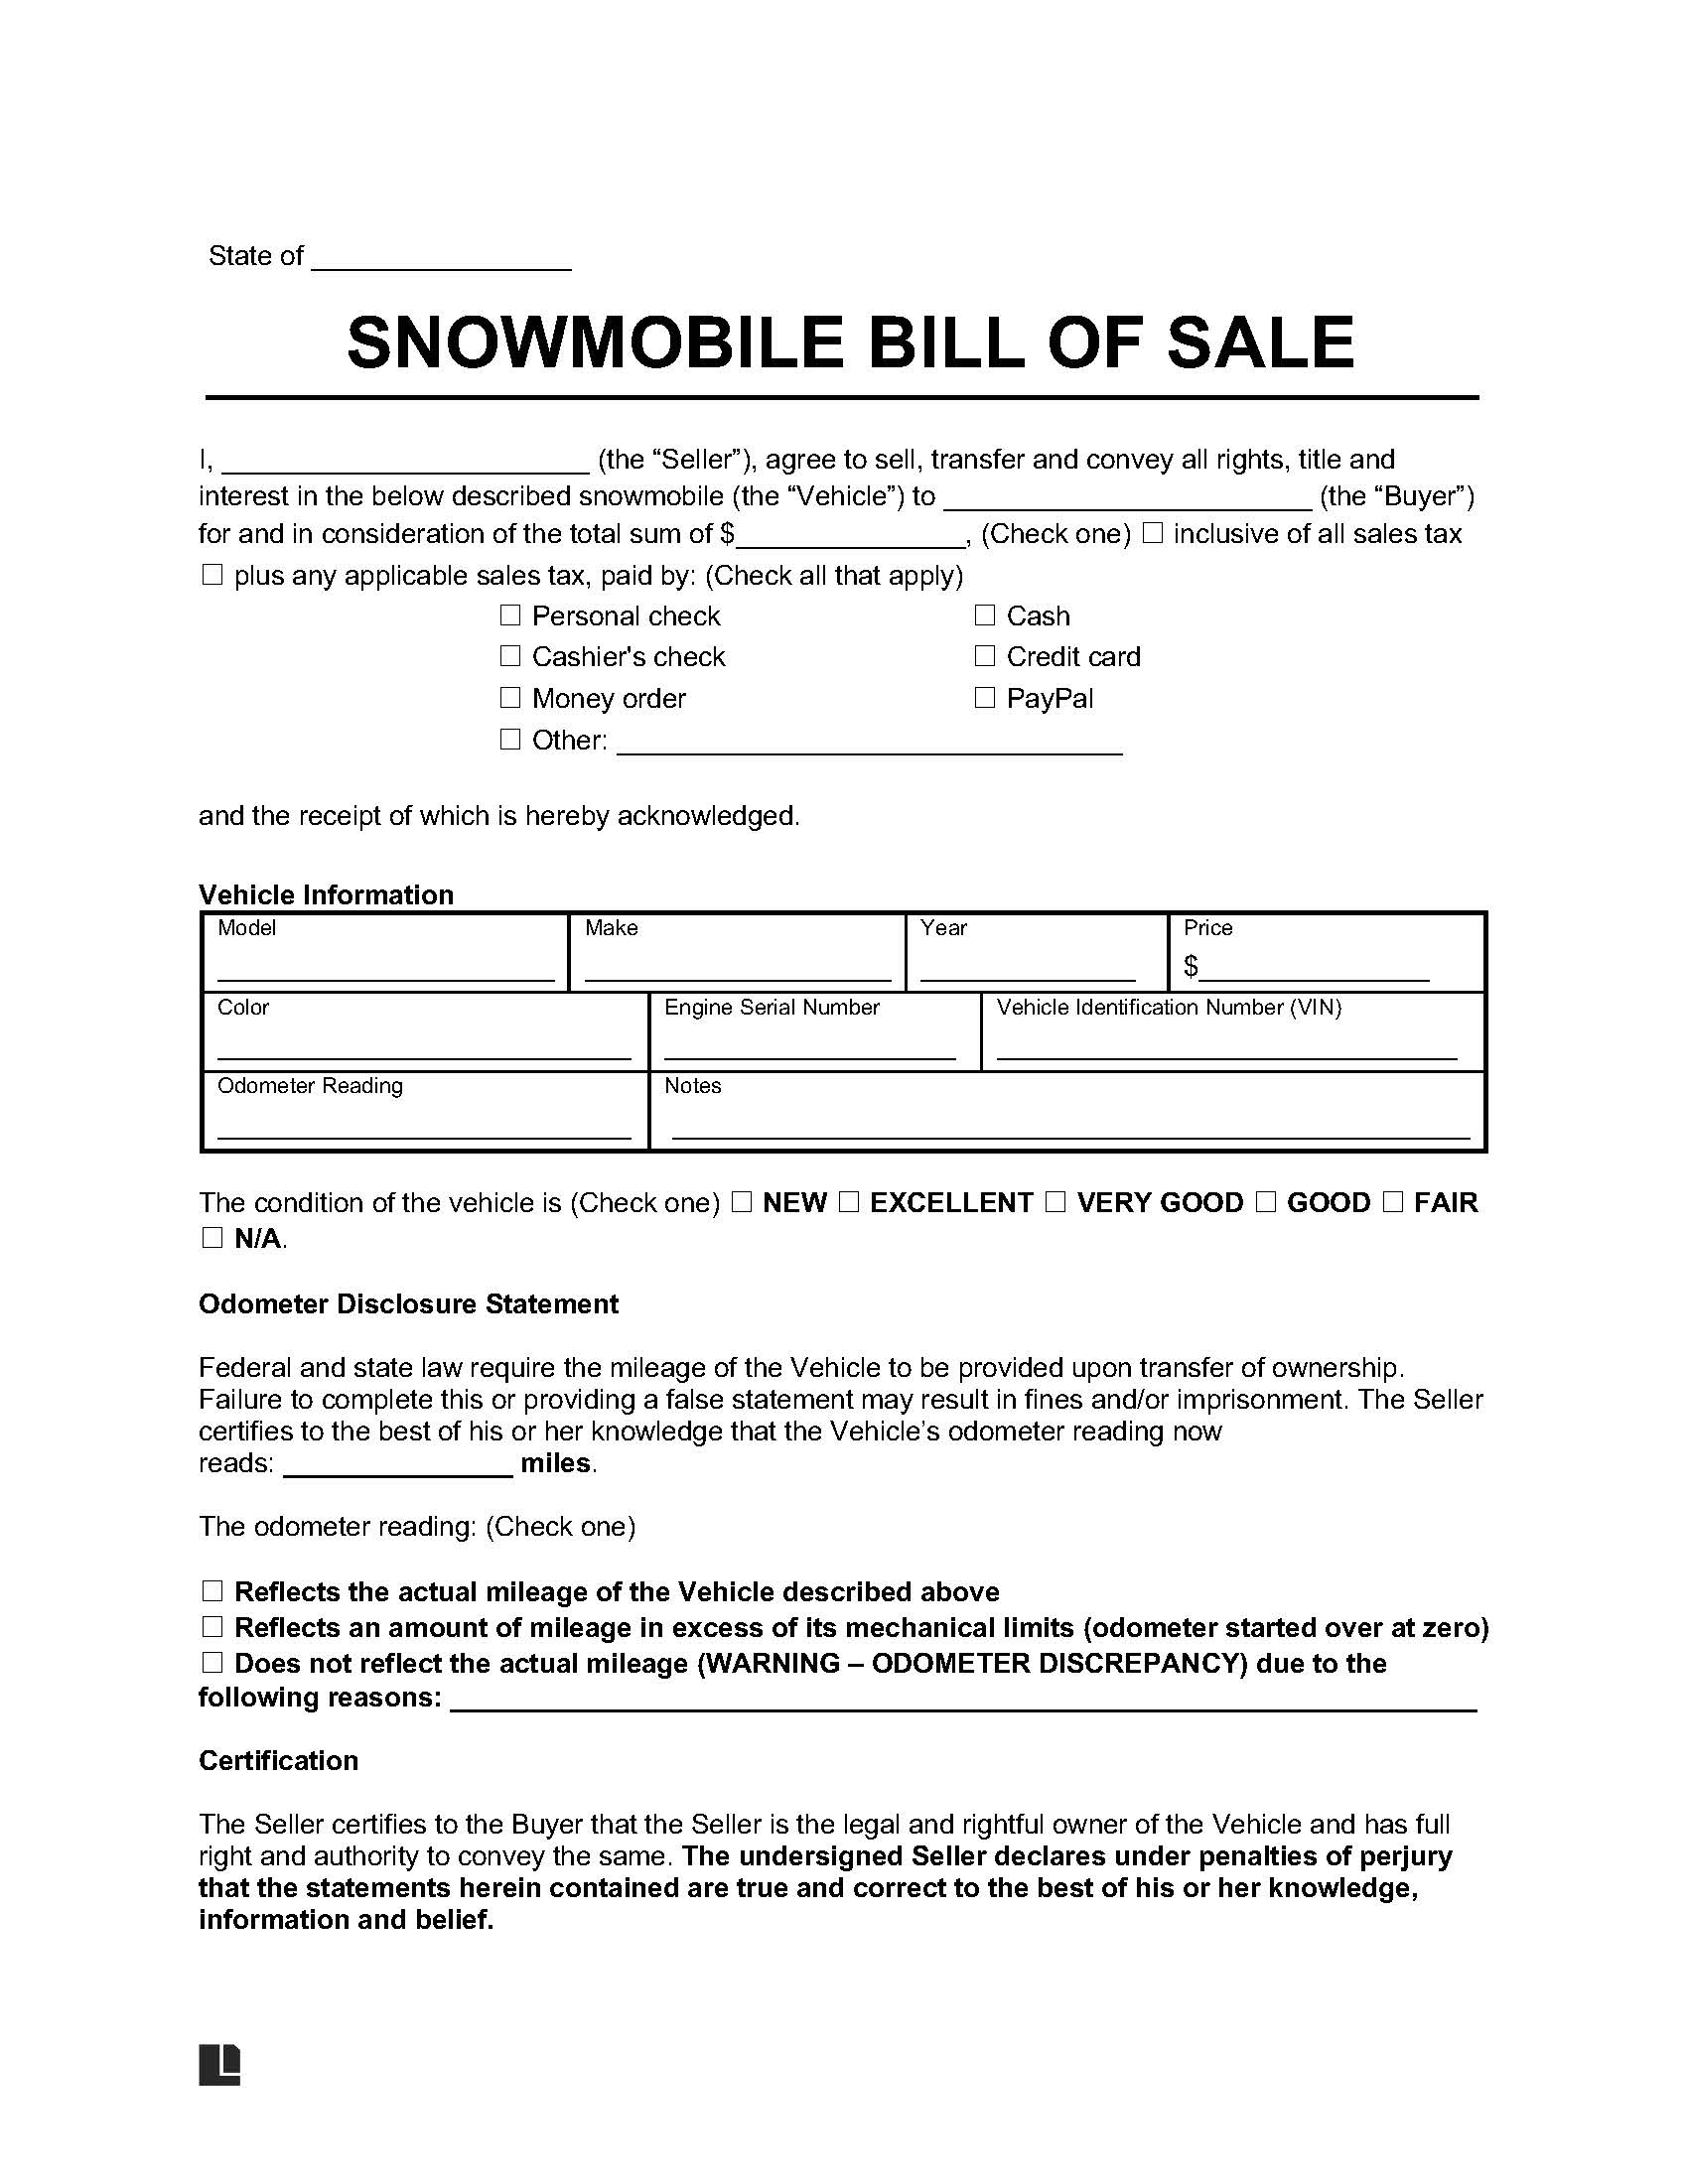 snowmobile bill of sale